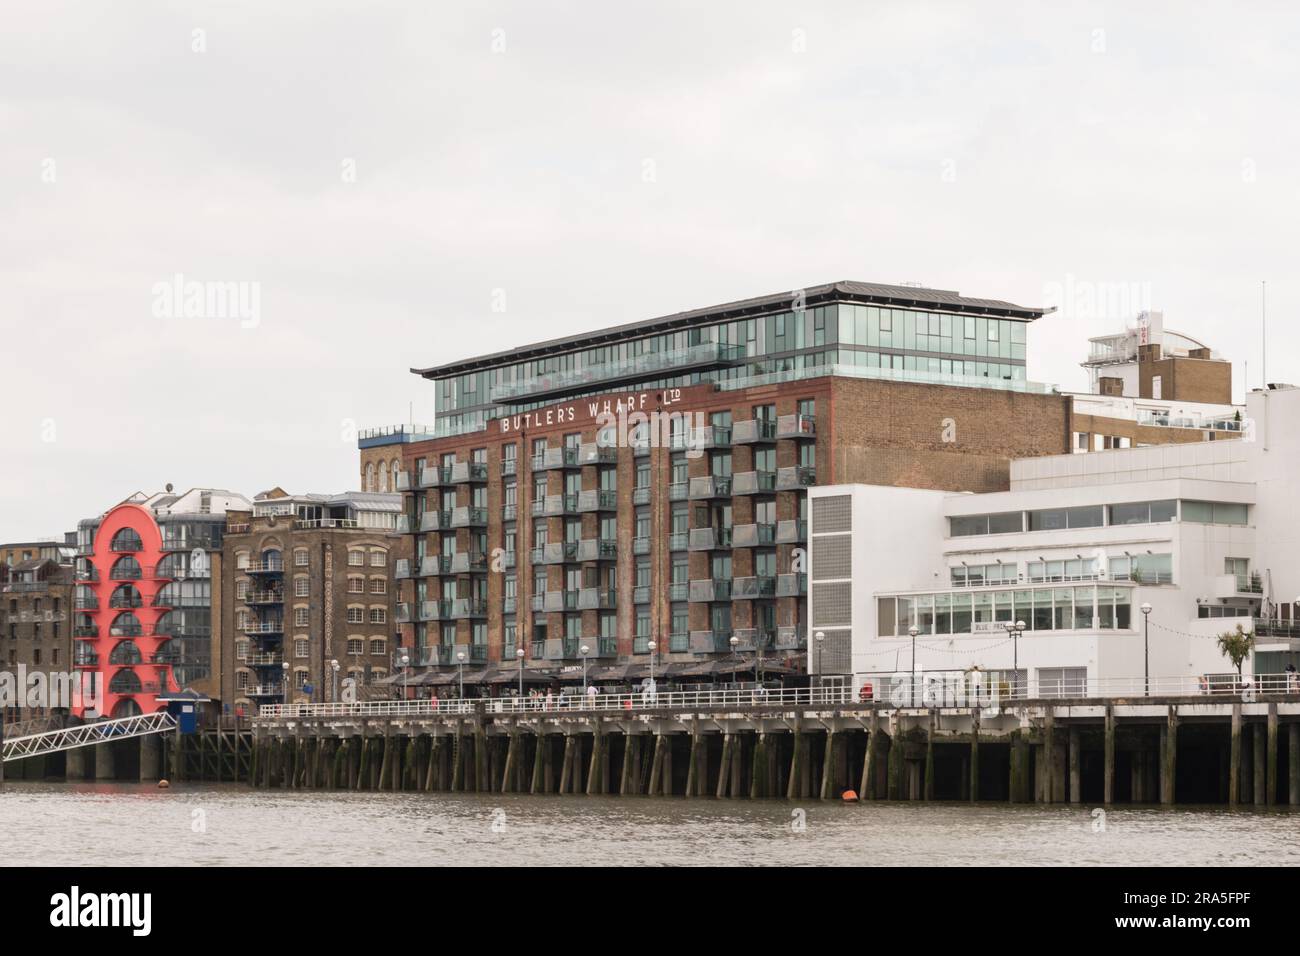 Butler's Wharf, Shad Thames, London, SE1, England, U.K. Stock Photo